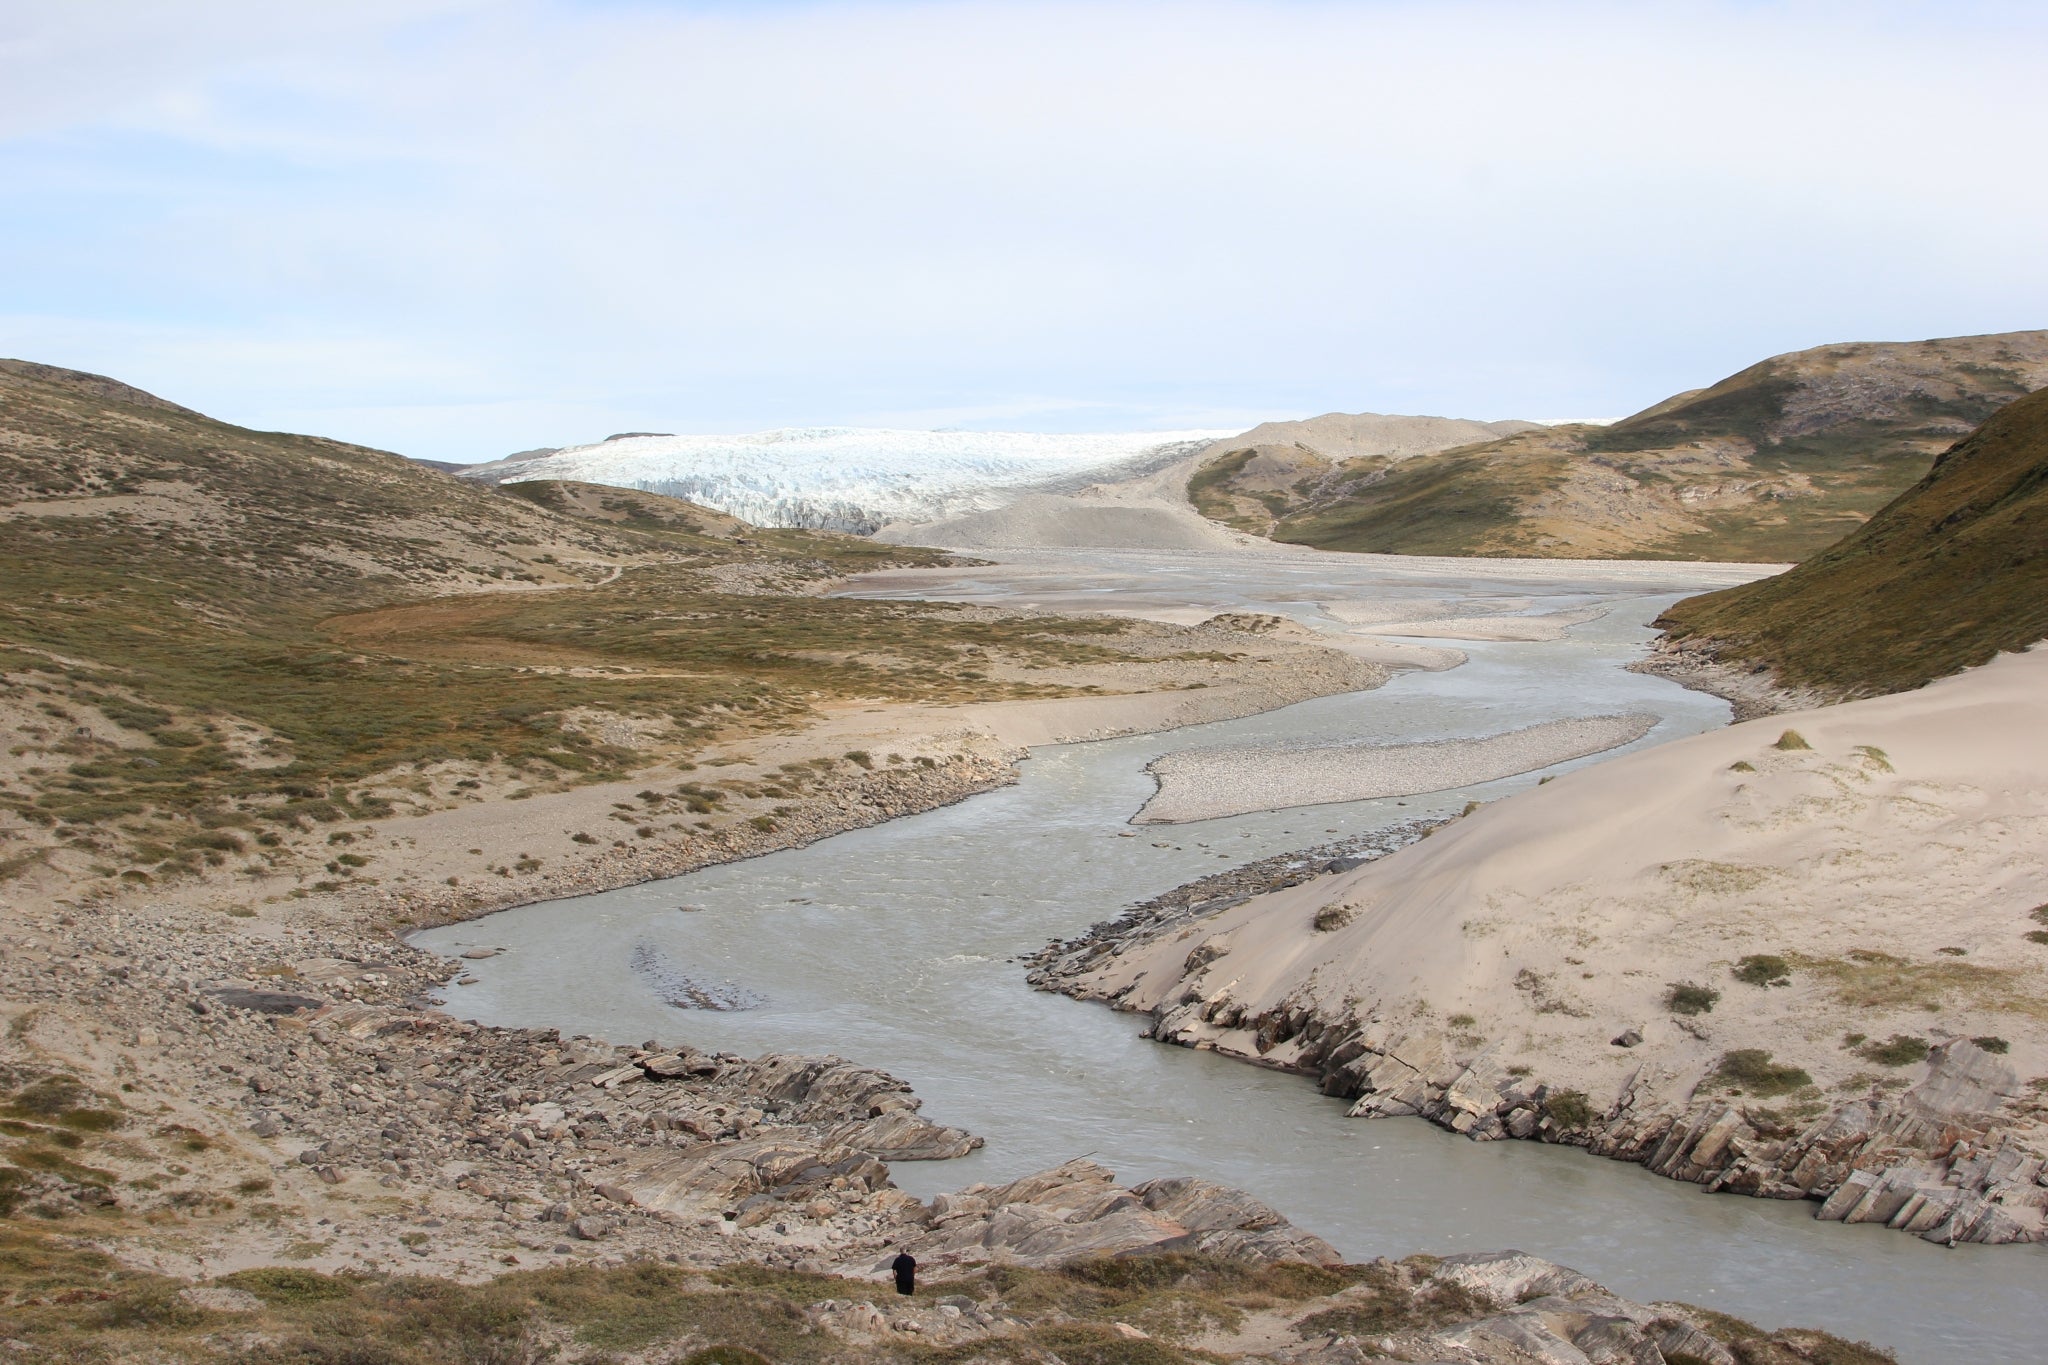 Landscape in Greenland